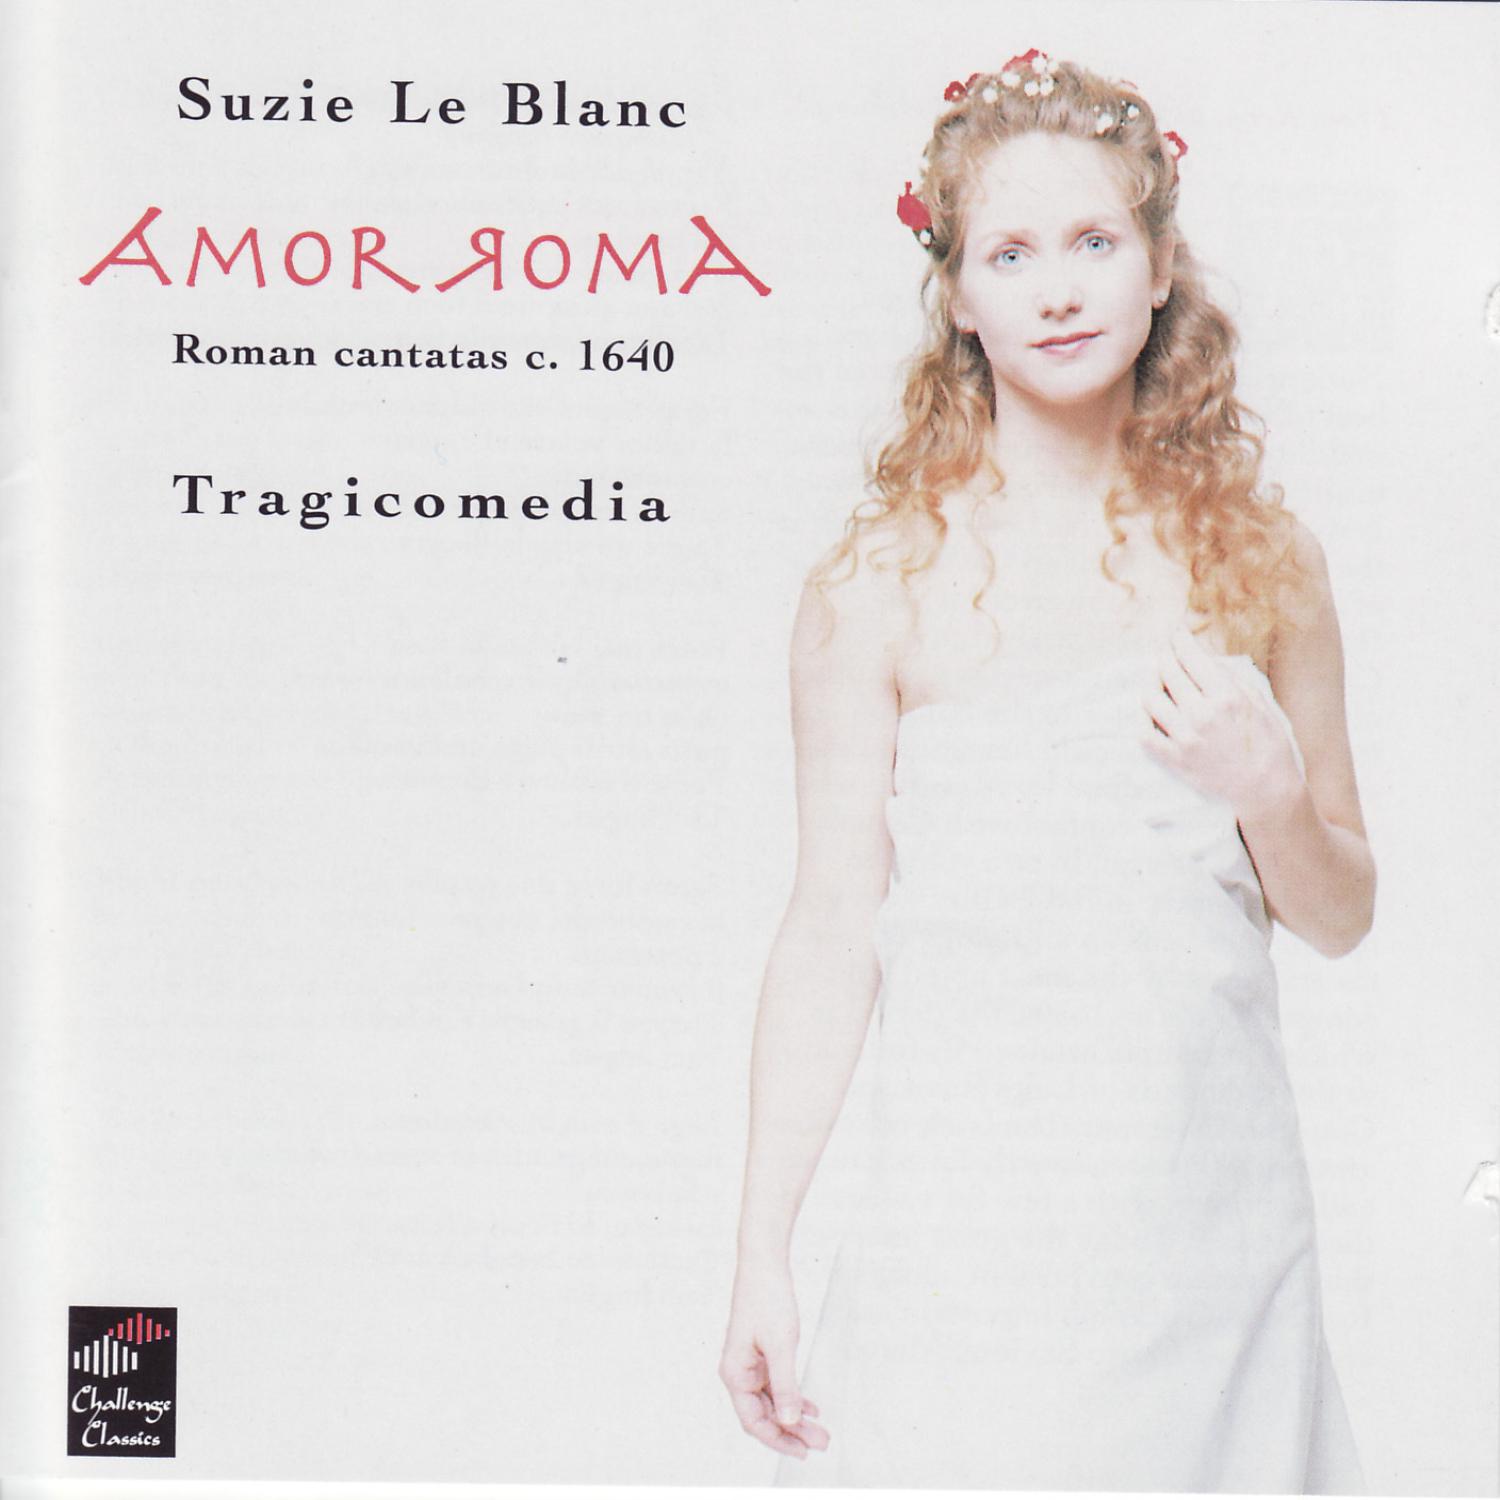 Suzie Le Blanc - Improvisation - Sdegno campion audace